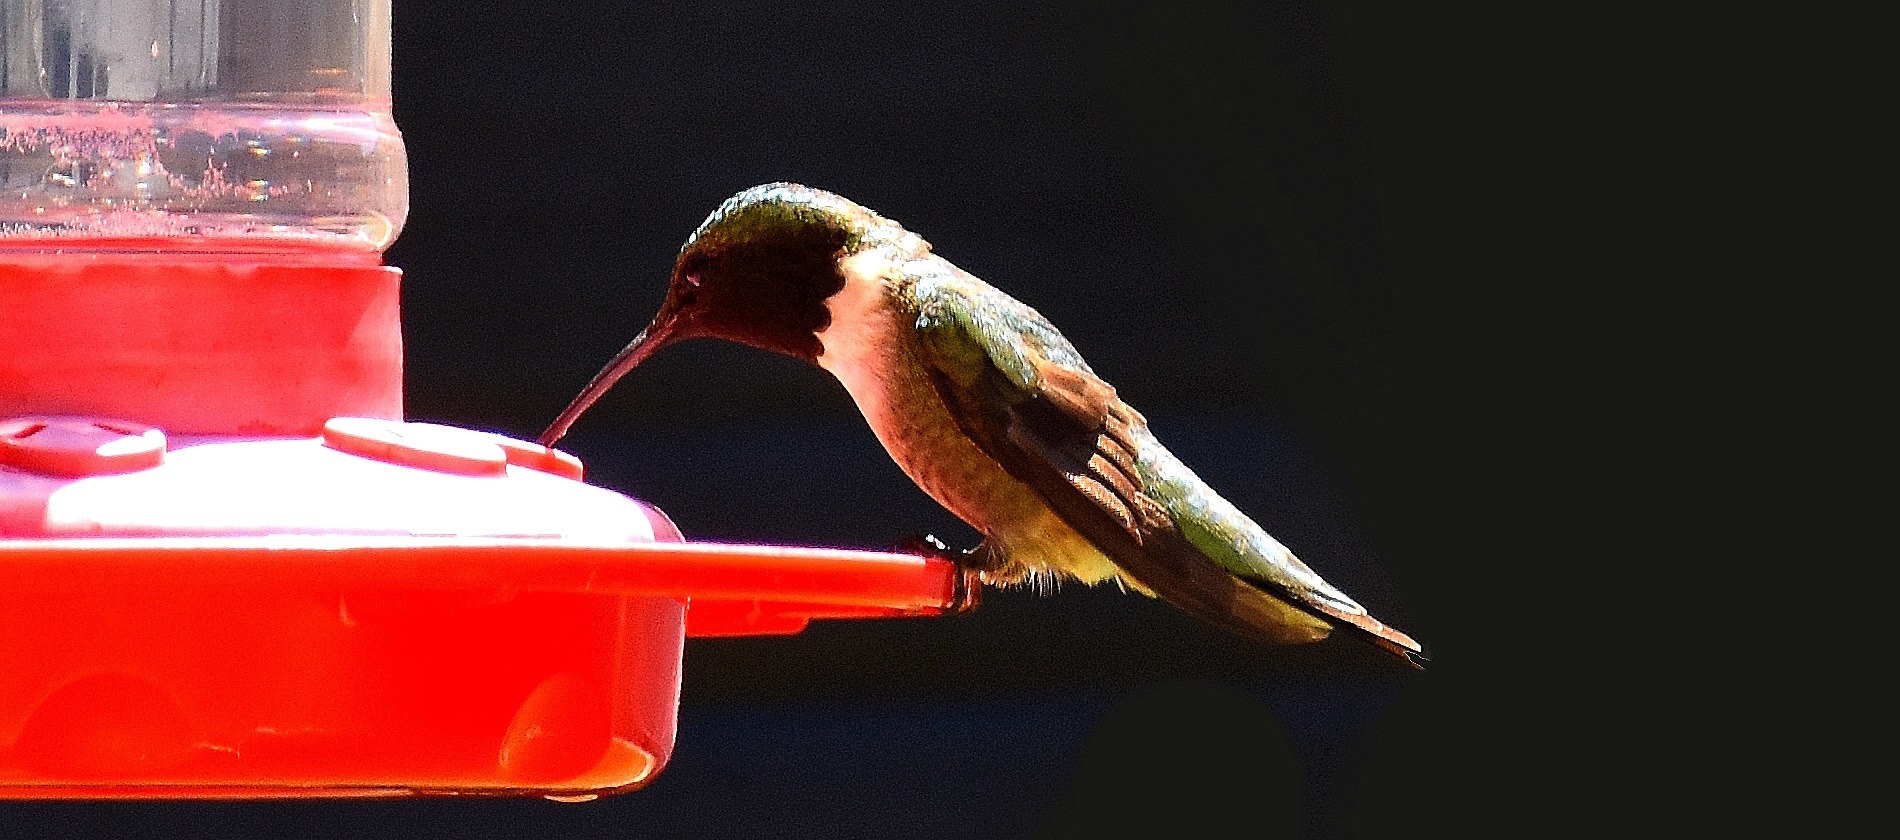 humming bird | image tagged in humming bird,nikon,kewlew | made w/ Imgflip meme maker